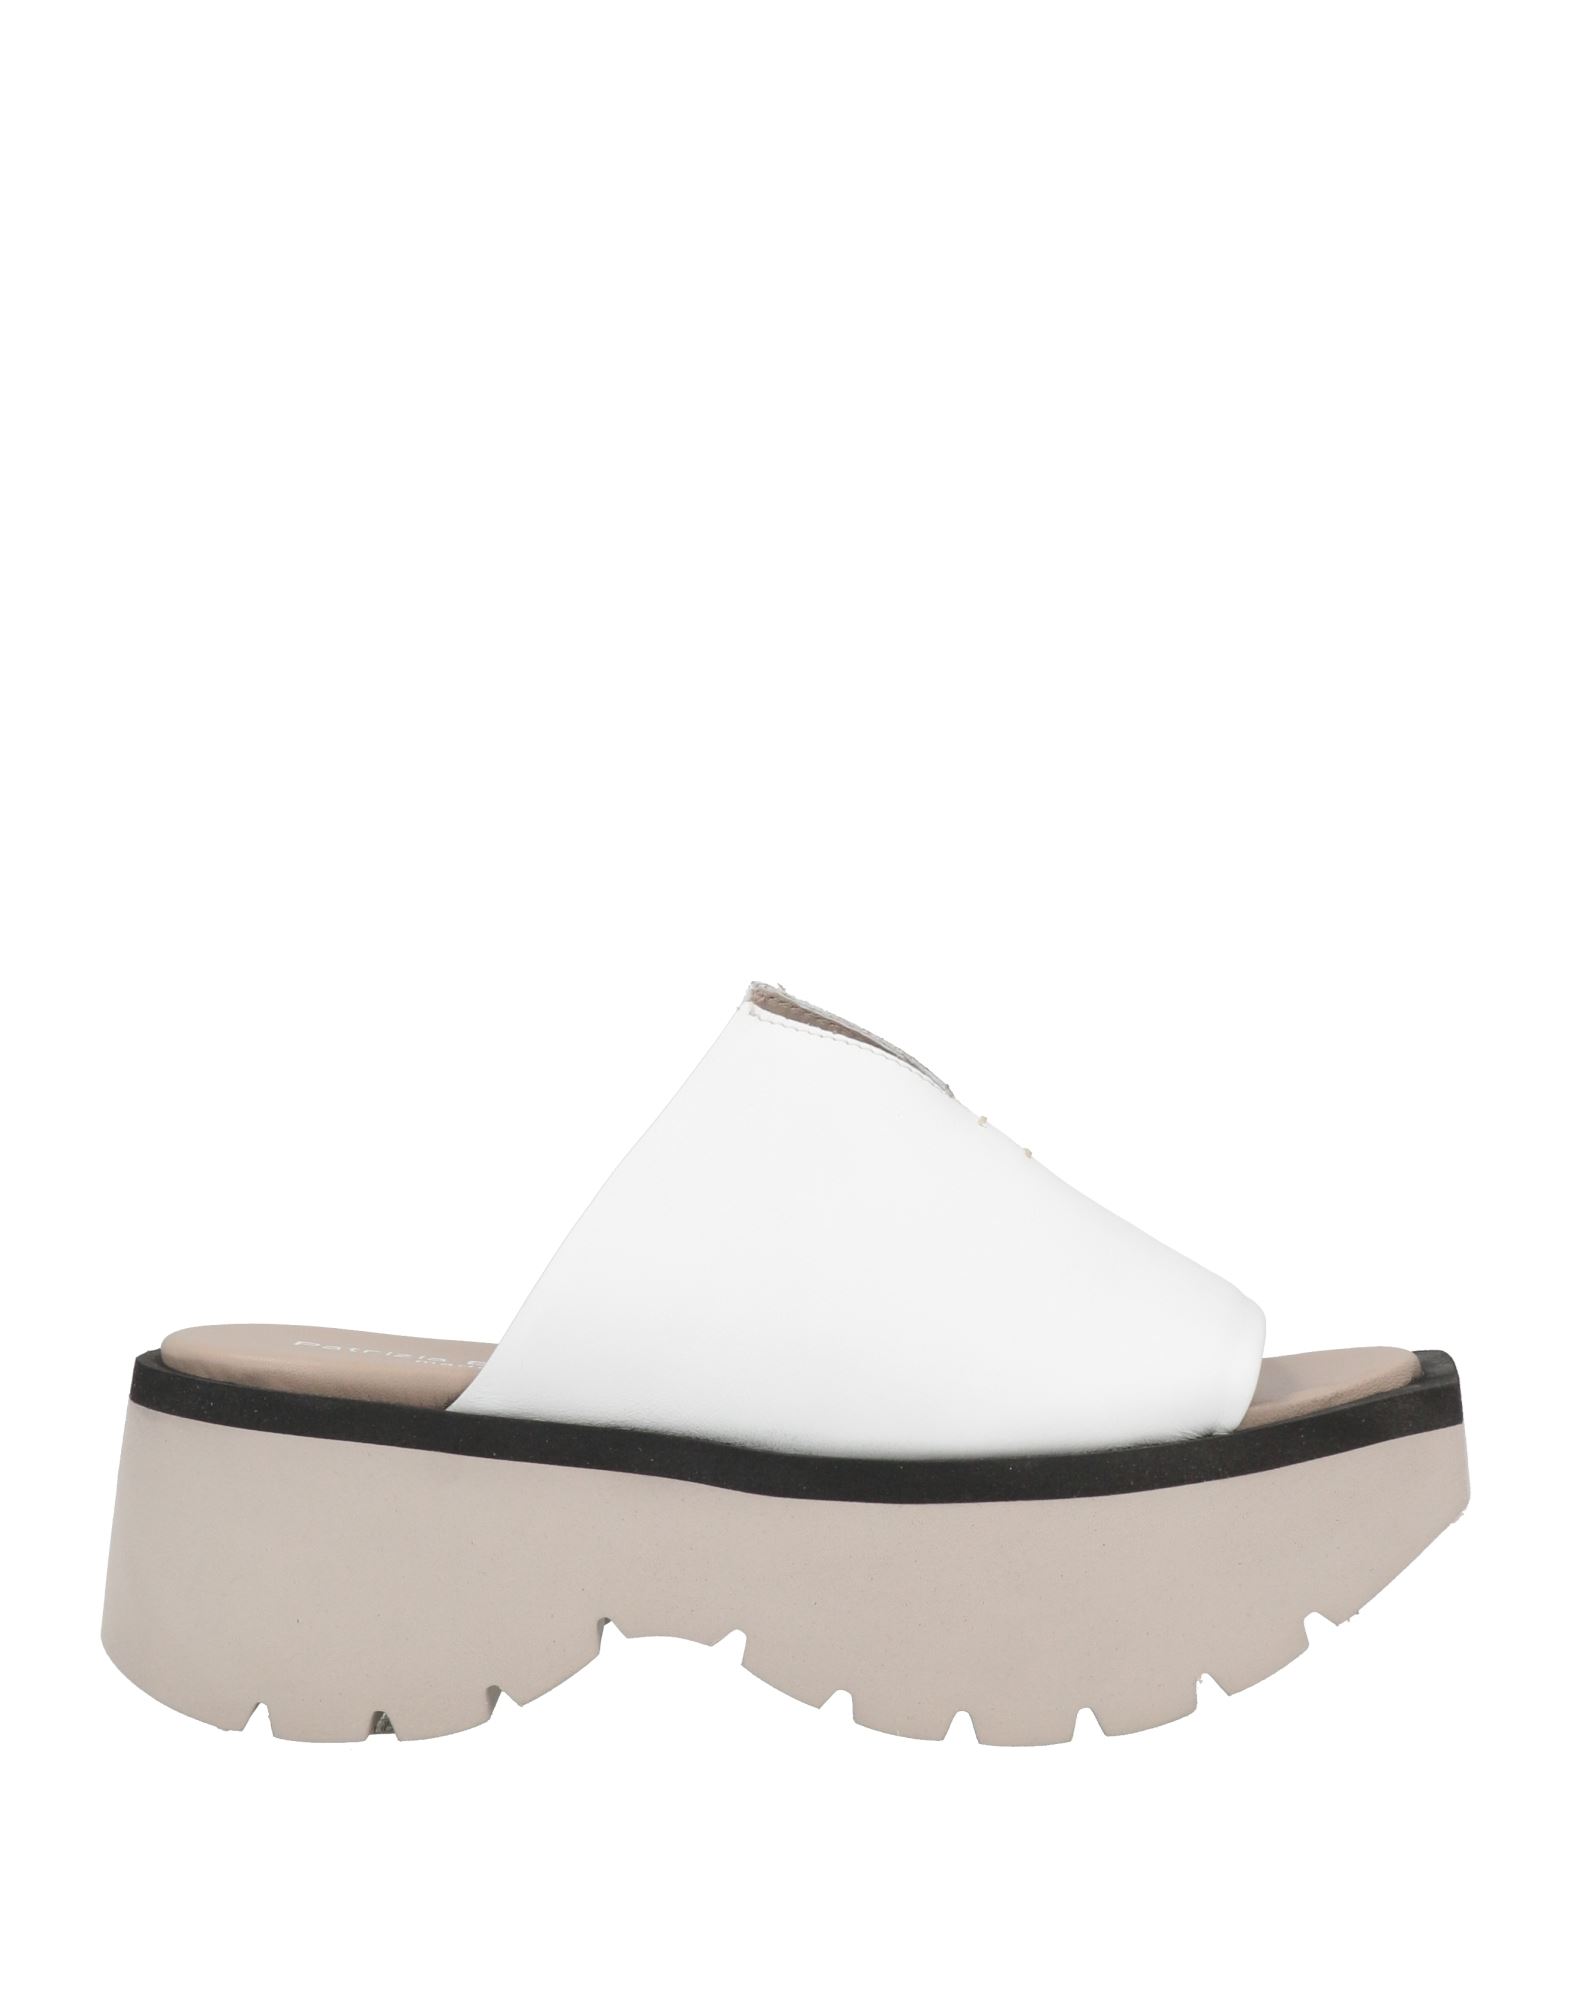 Patrizia Bonfanti Sandals In White